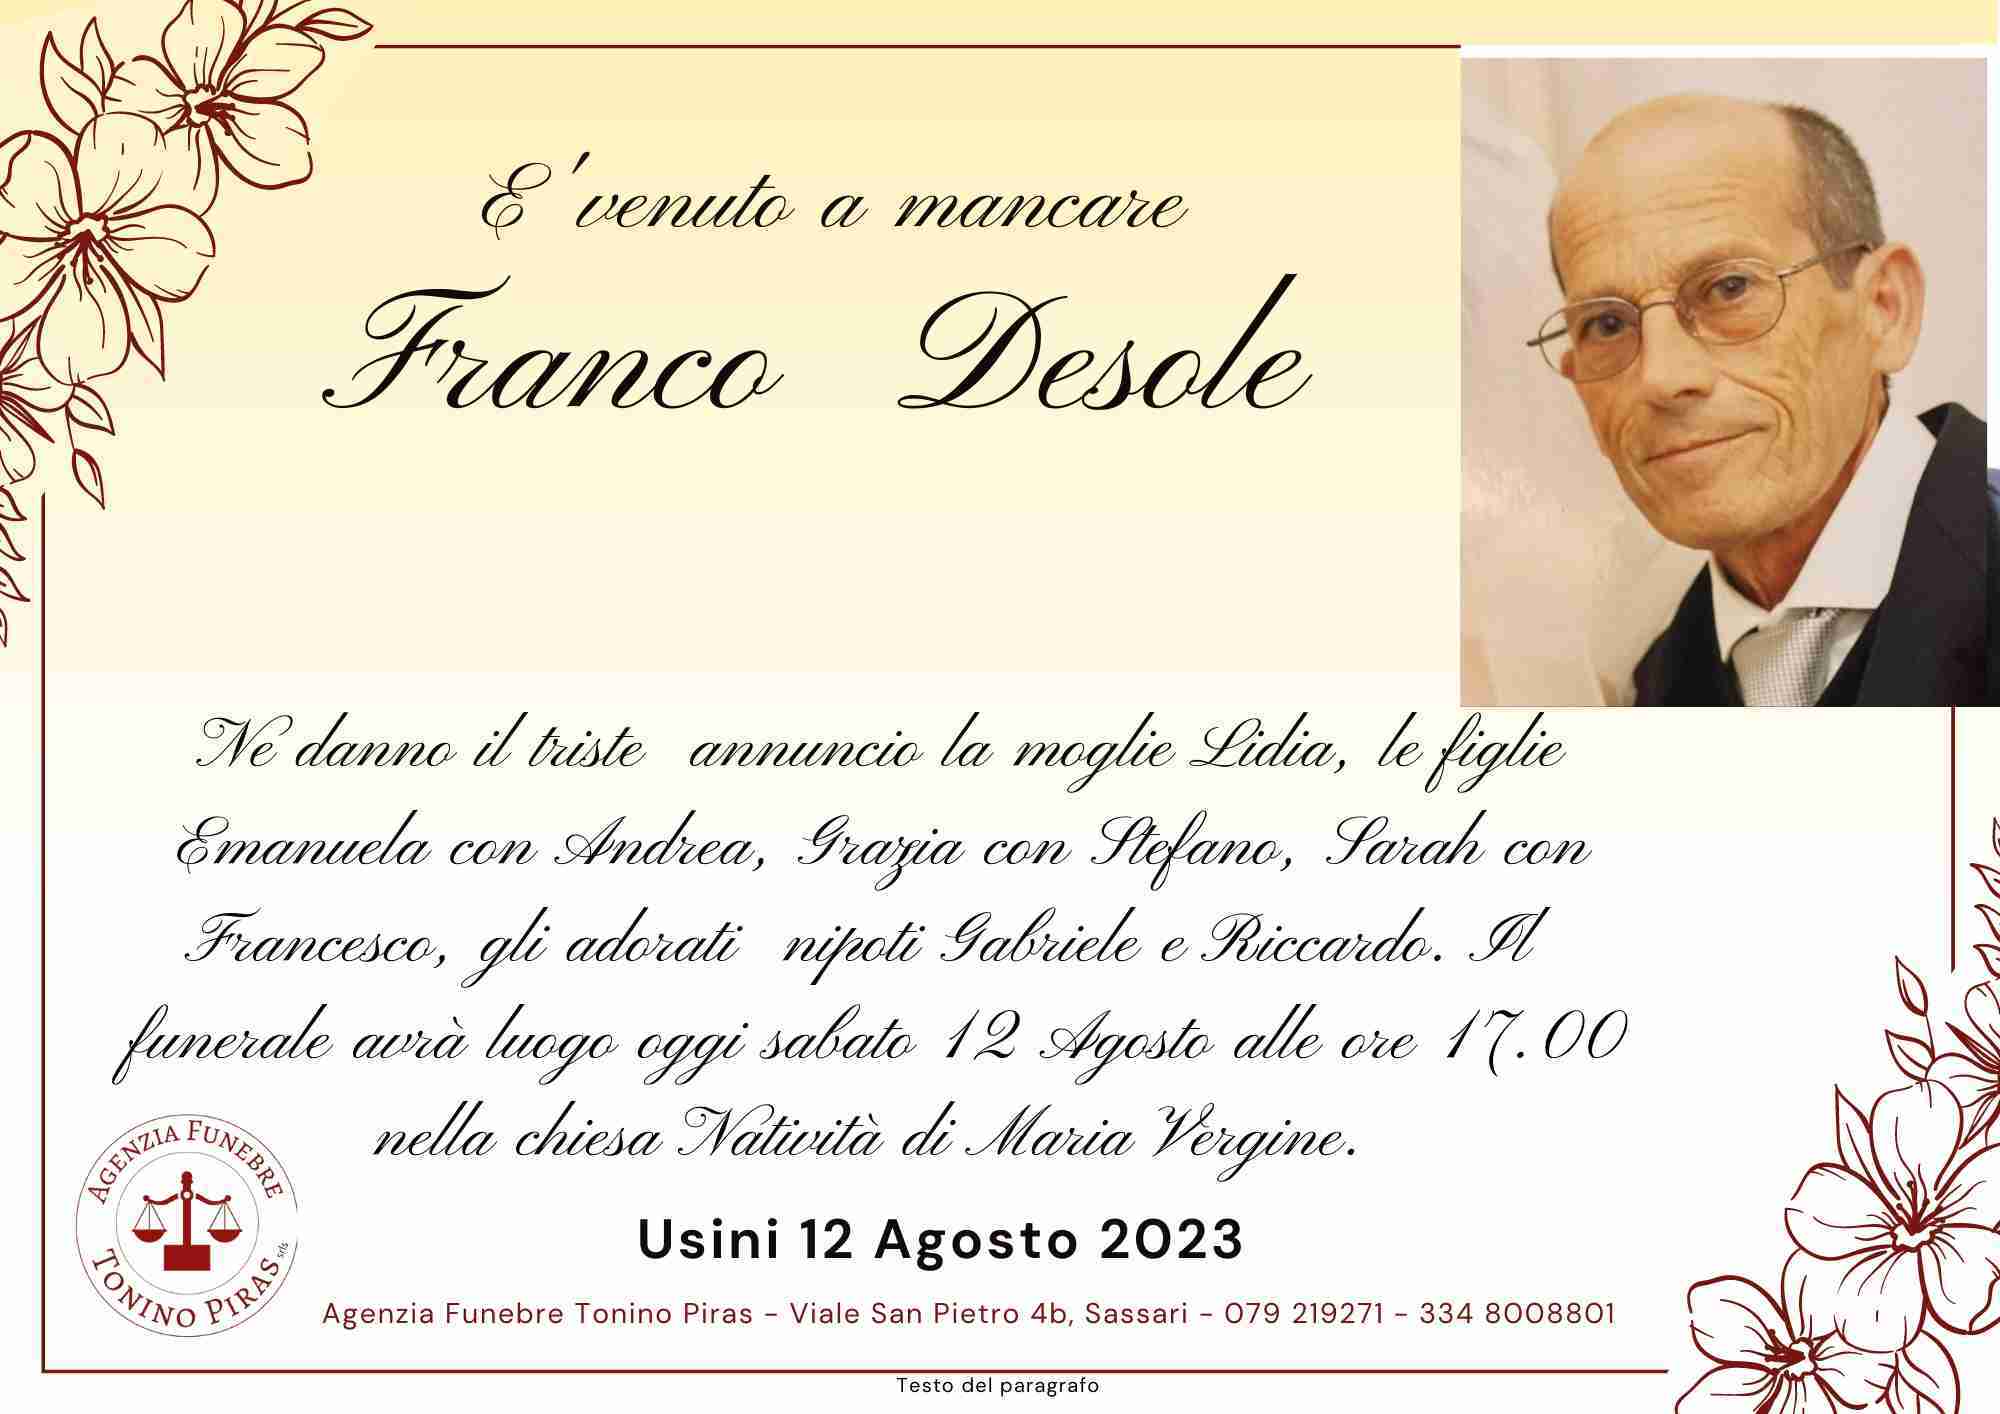 Franco Salvatore Desole